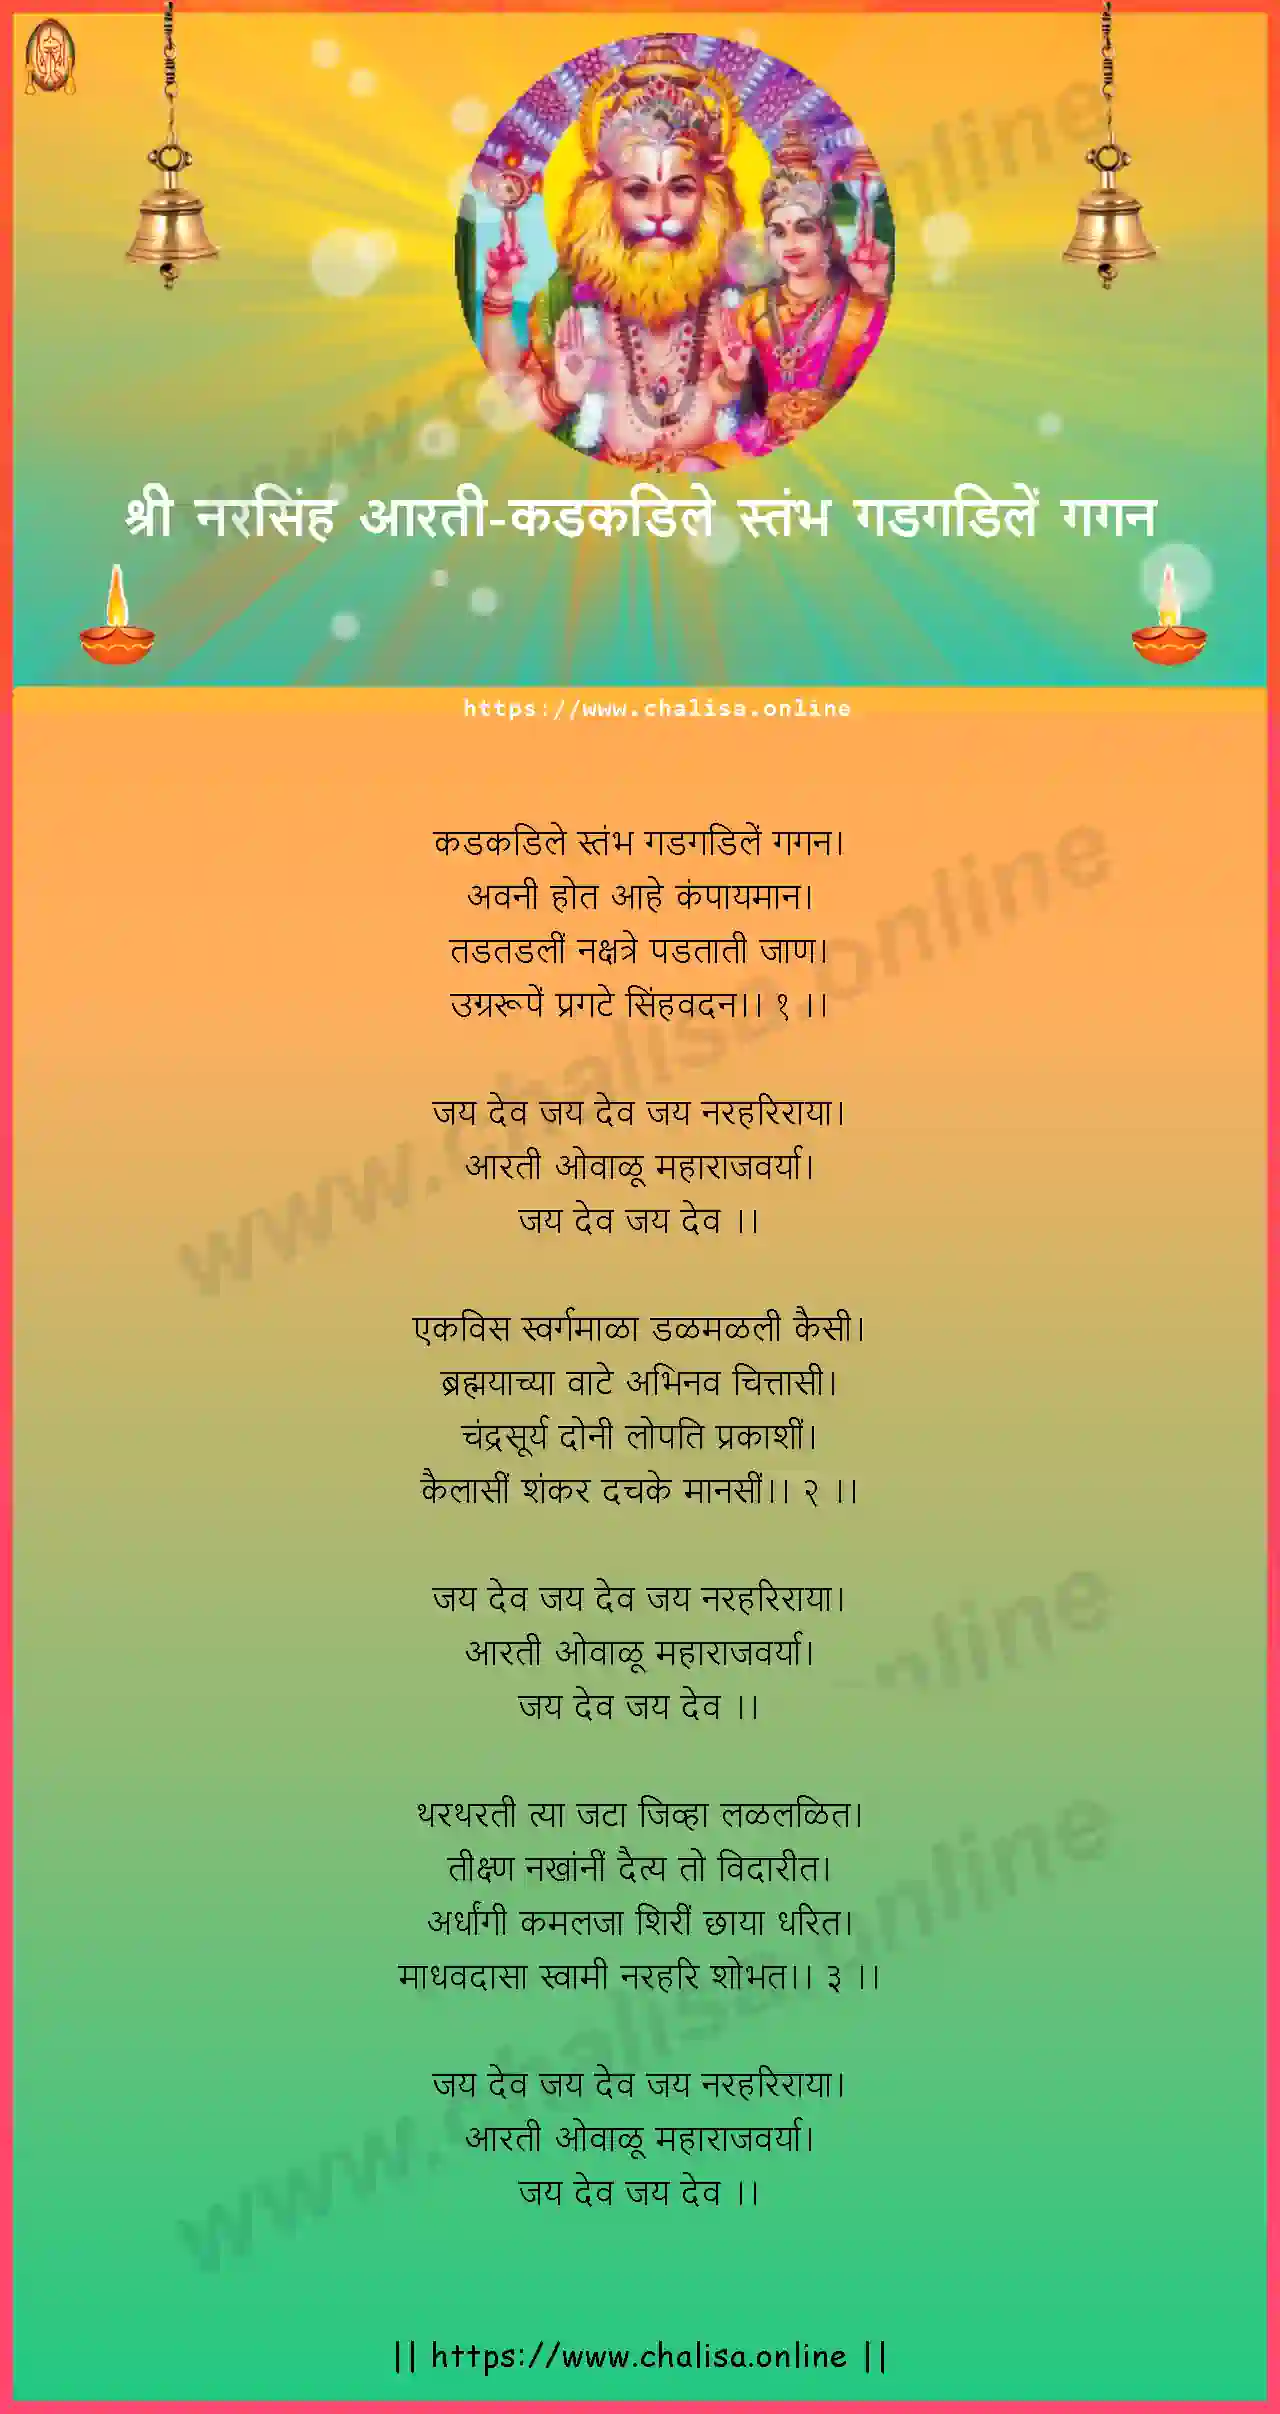 kadkadile-stambh-gadgadile-narasimha-aarti-marathi-lyrics-download